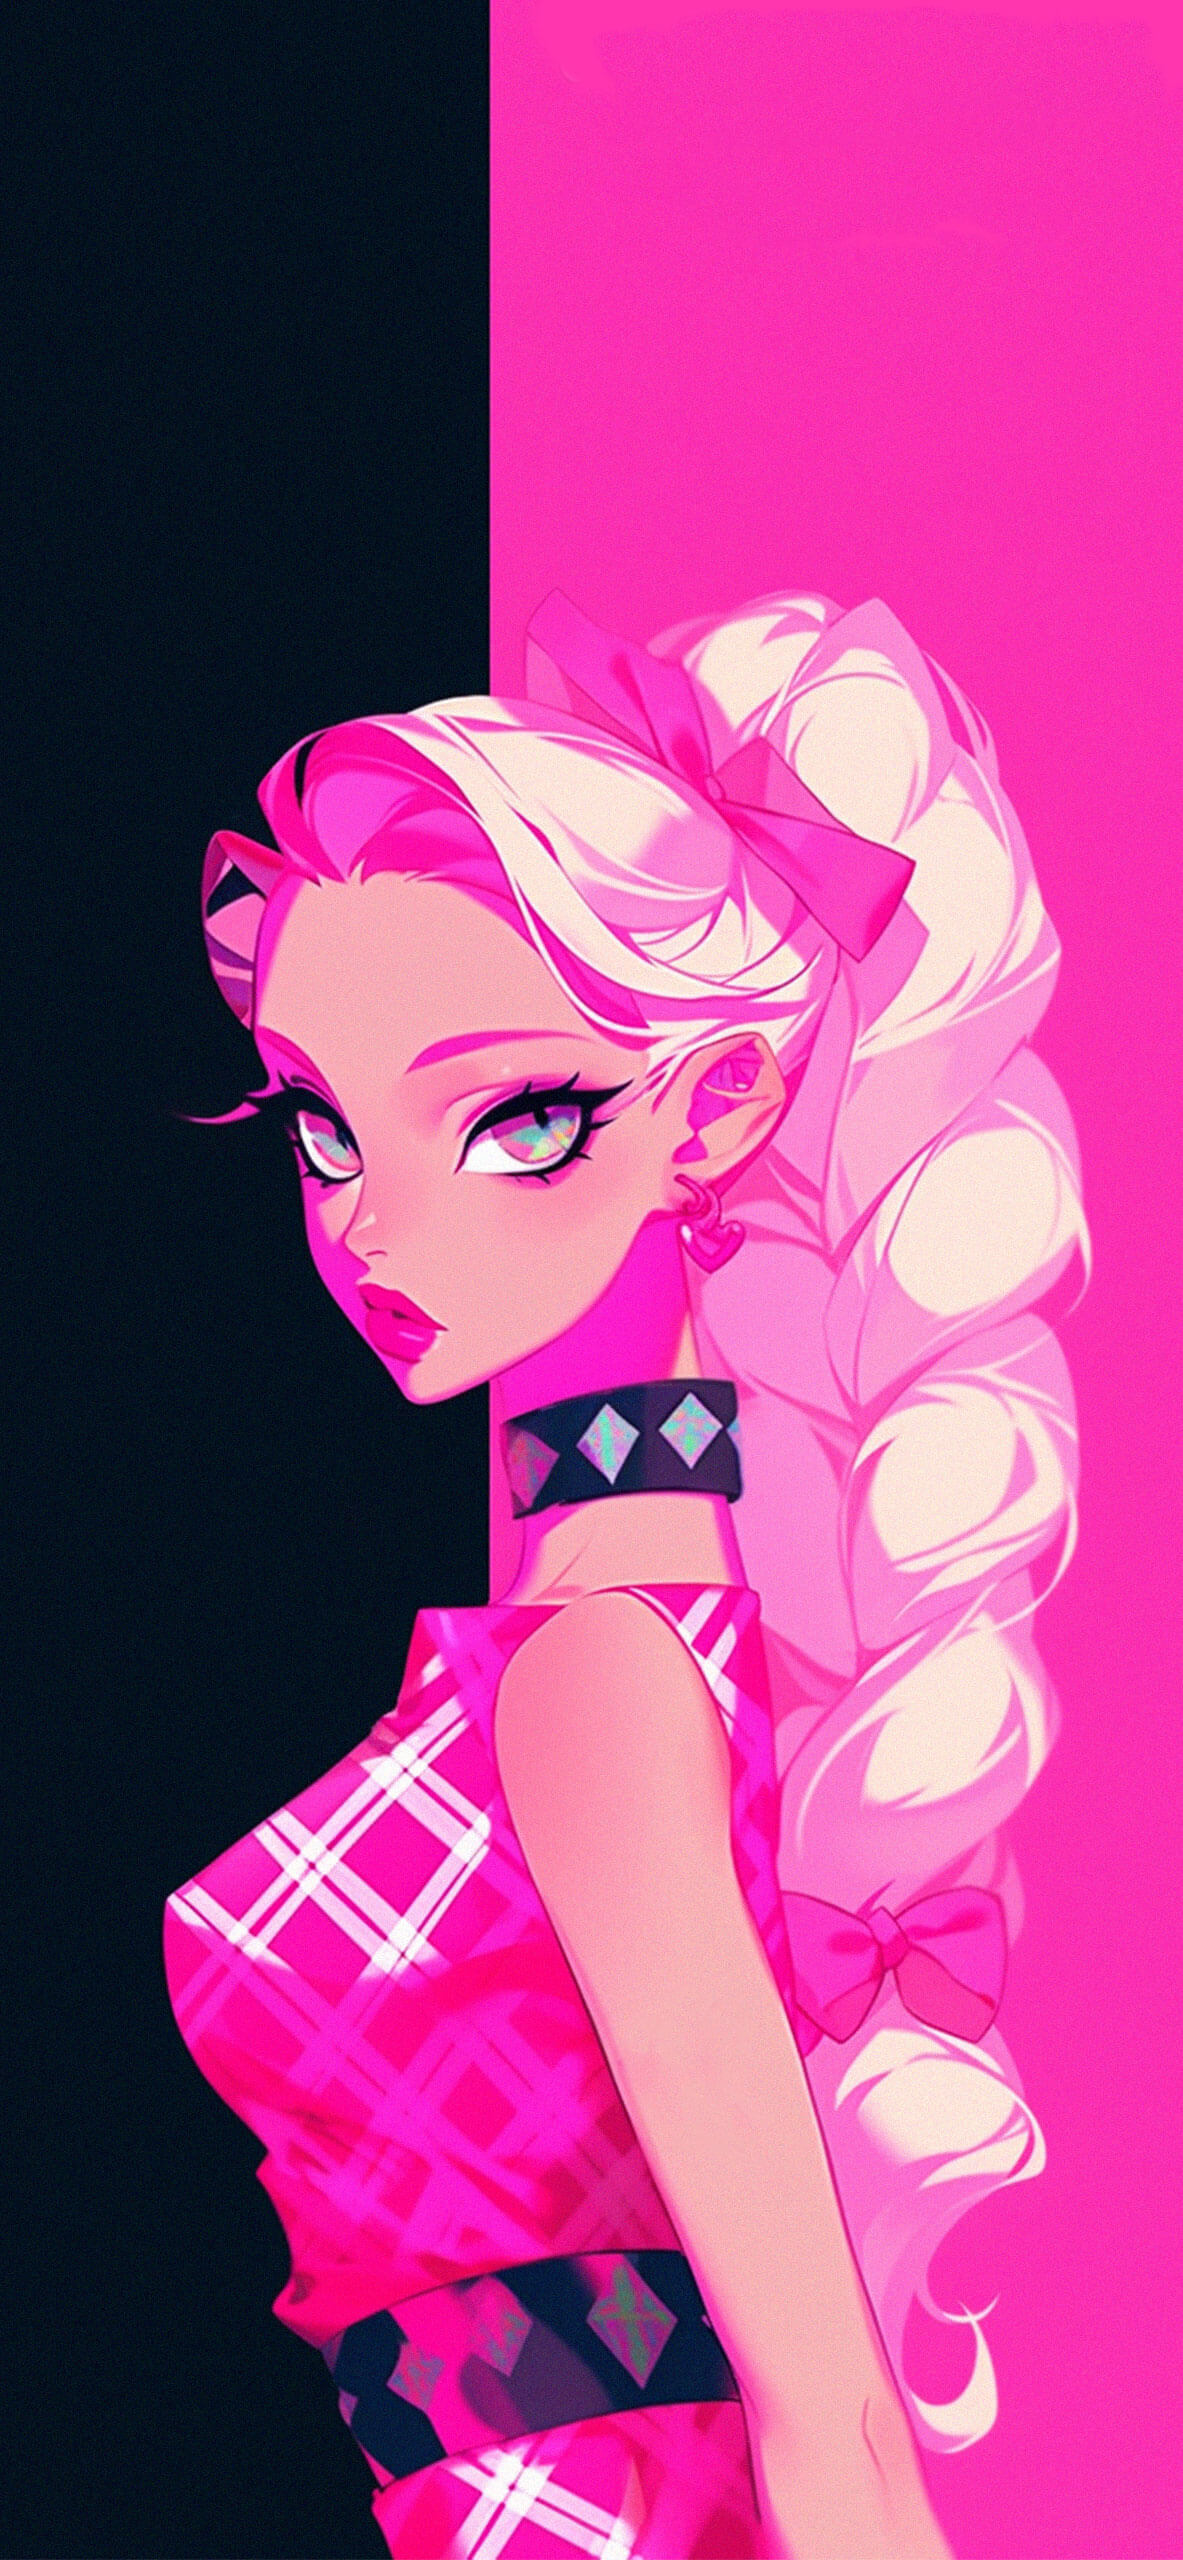 Barbie pink aesthetic wallpaper Preppy cute girl wallpaper for